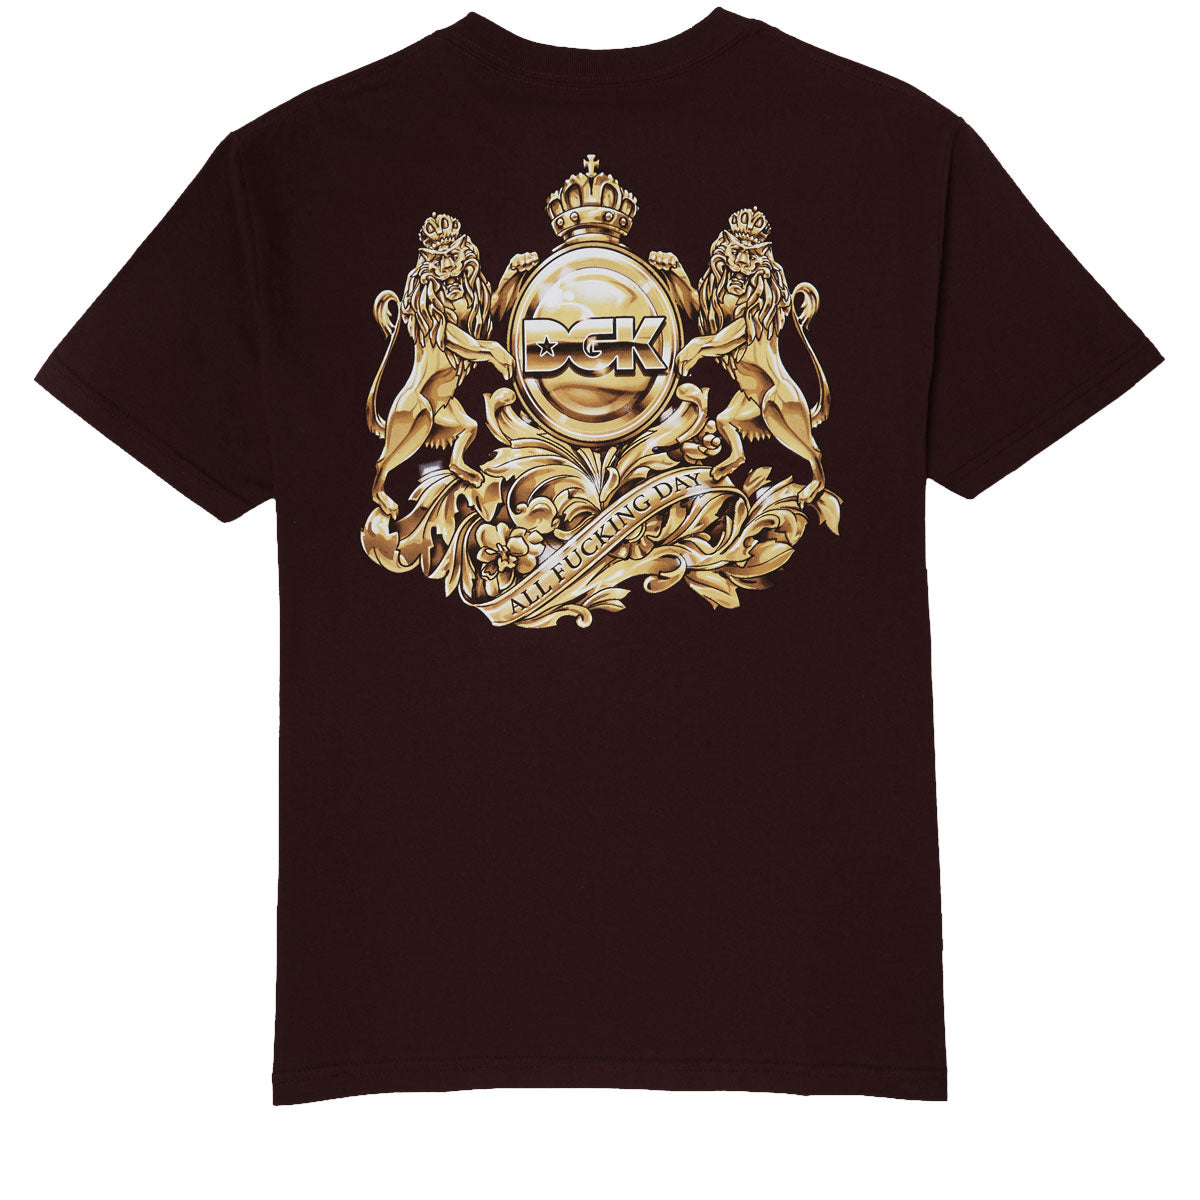 DGK Og Crest T-Shirt - Burgundy image 1